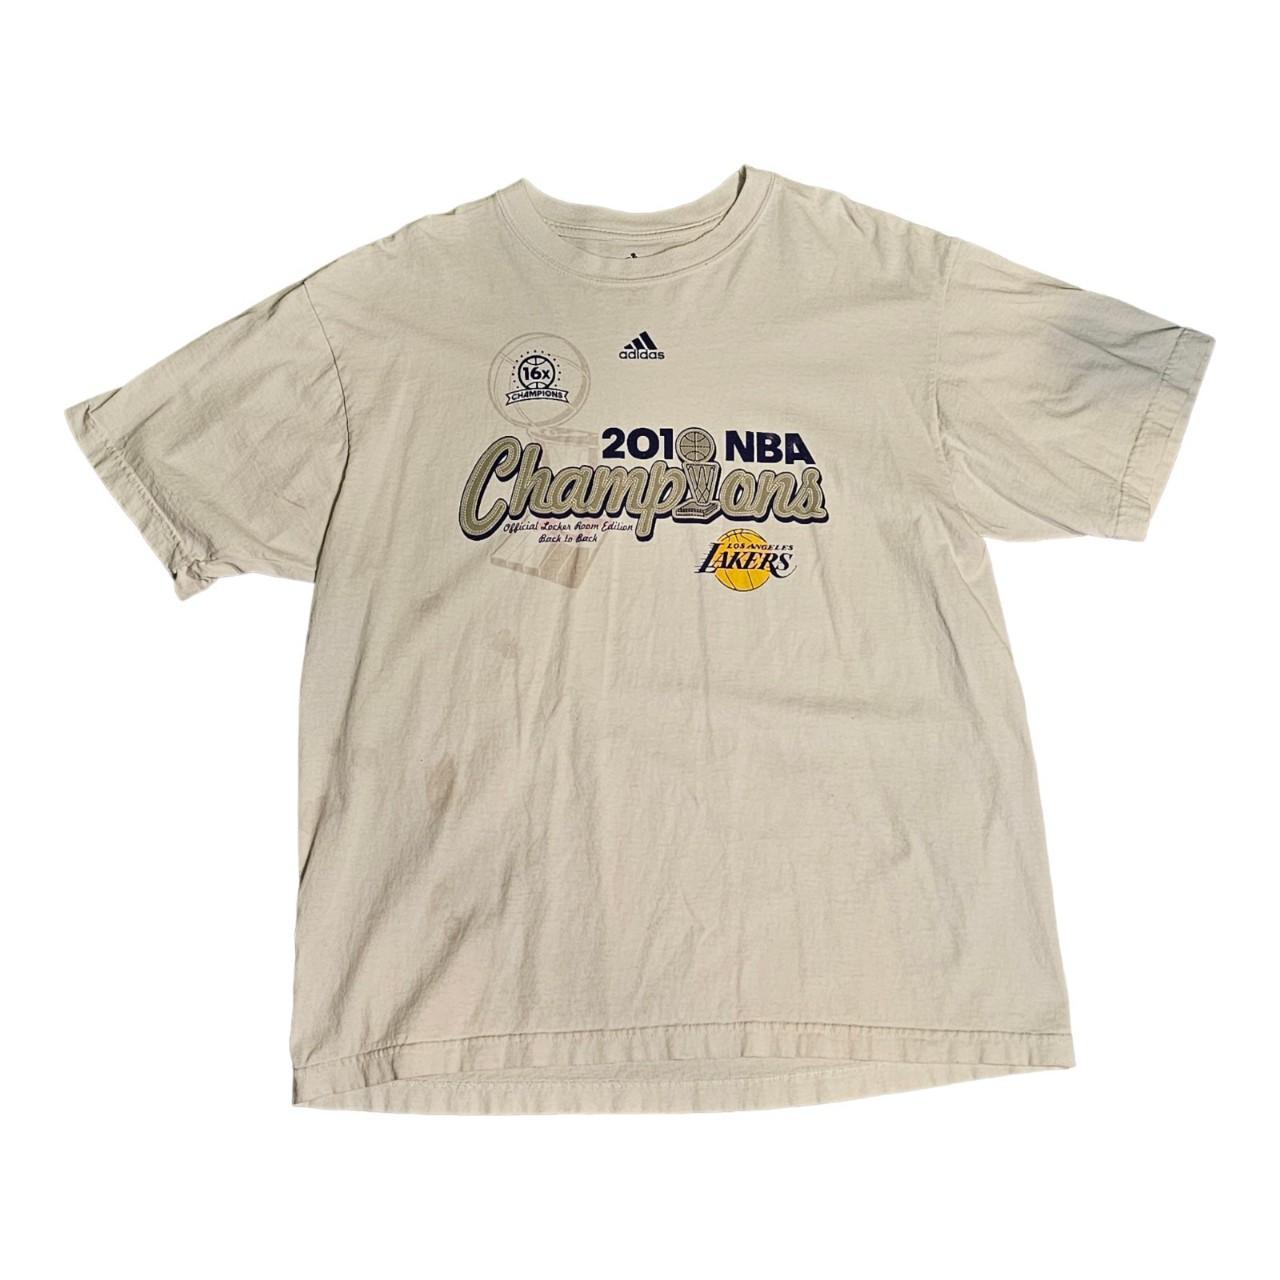 Official Los Angeles Lakers T-Shirts, Lakers Tees, Lakers Locker Room Tee